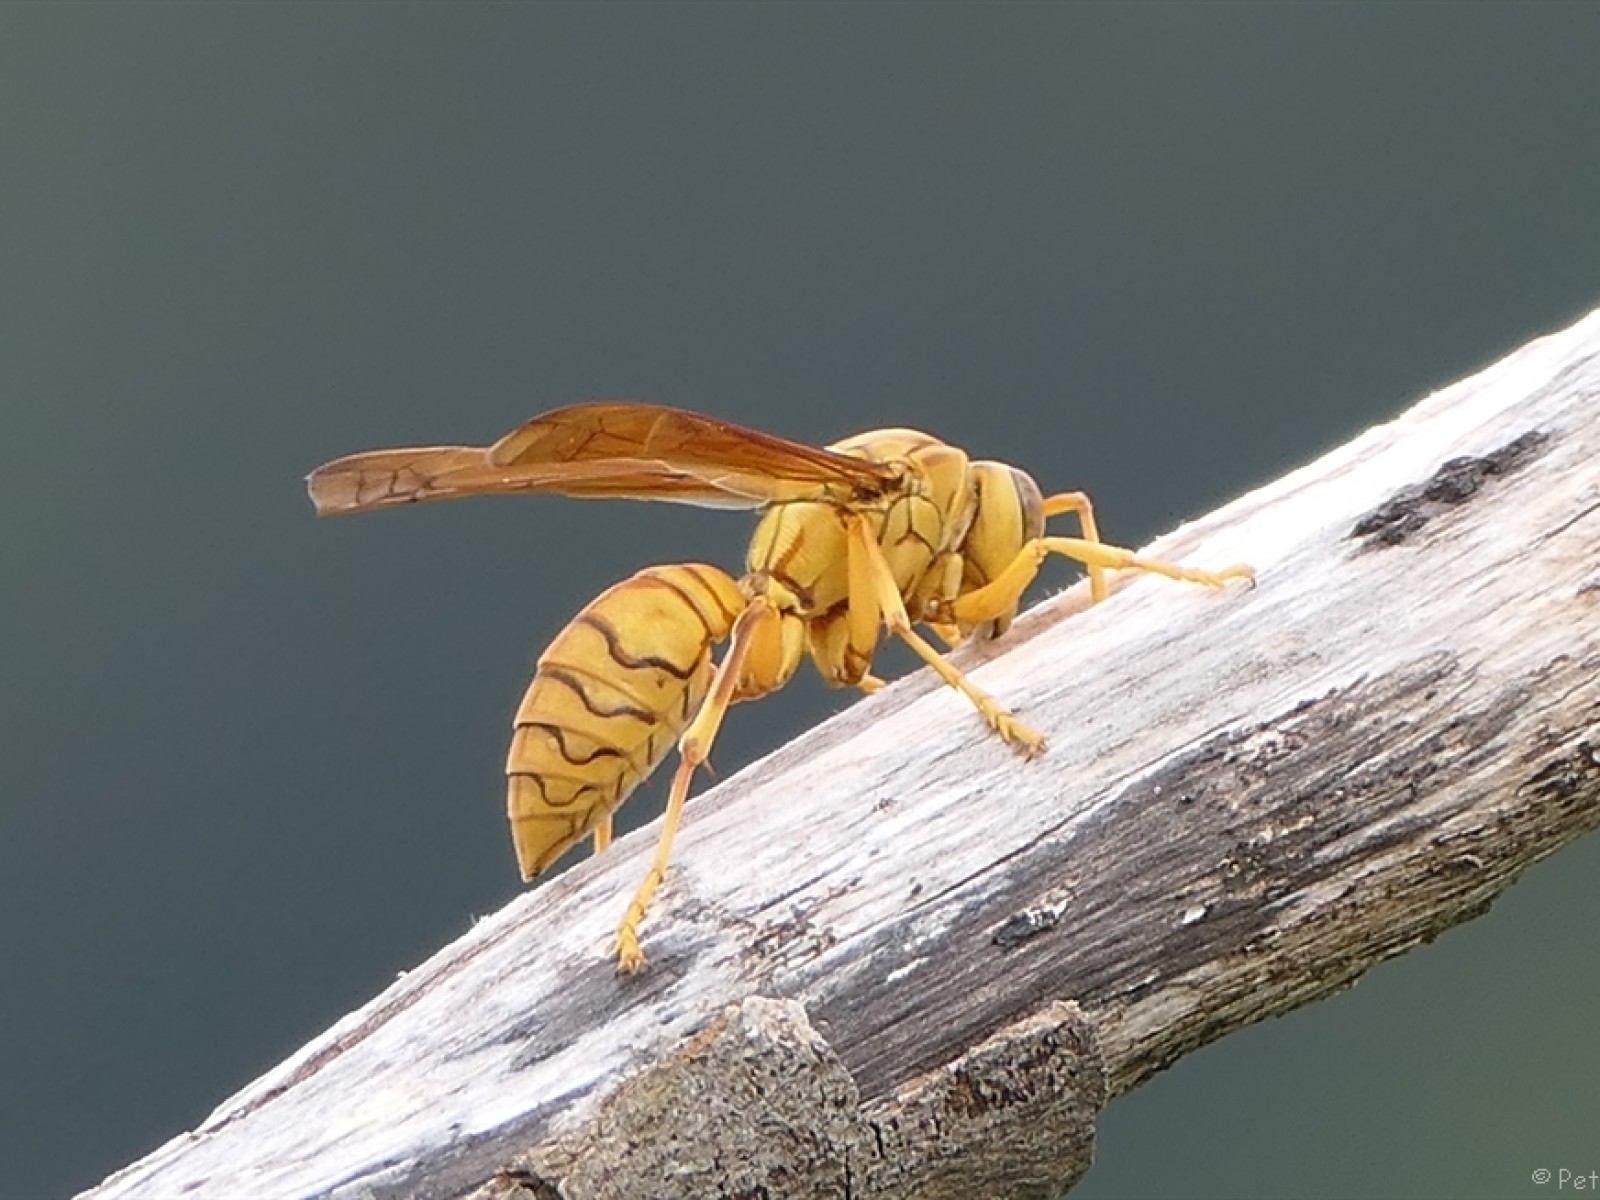 Aculeate Wasps : (Vespidae) Polistes wattii